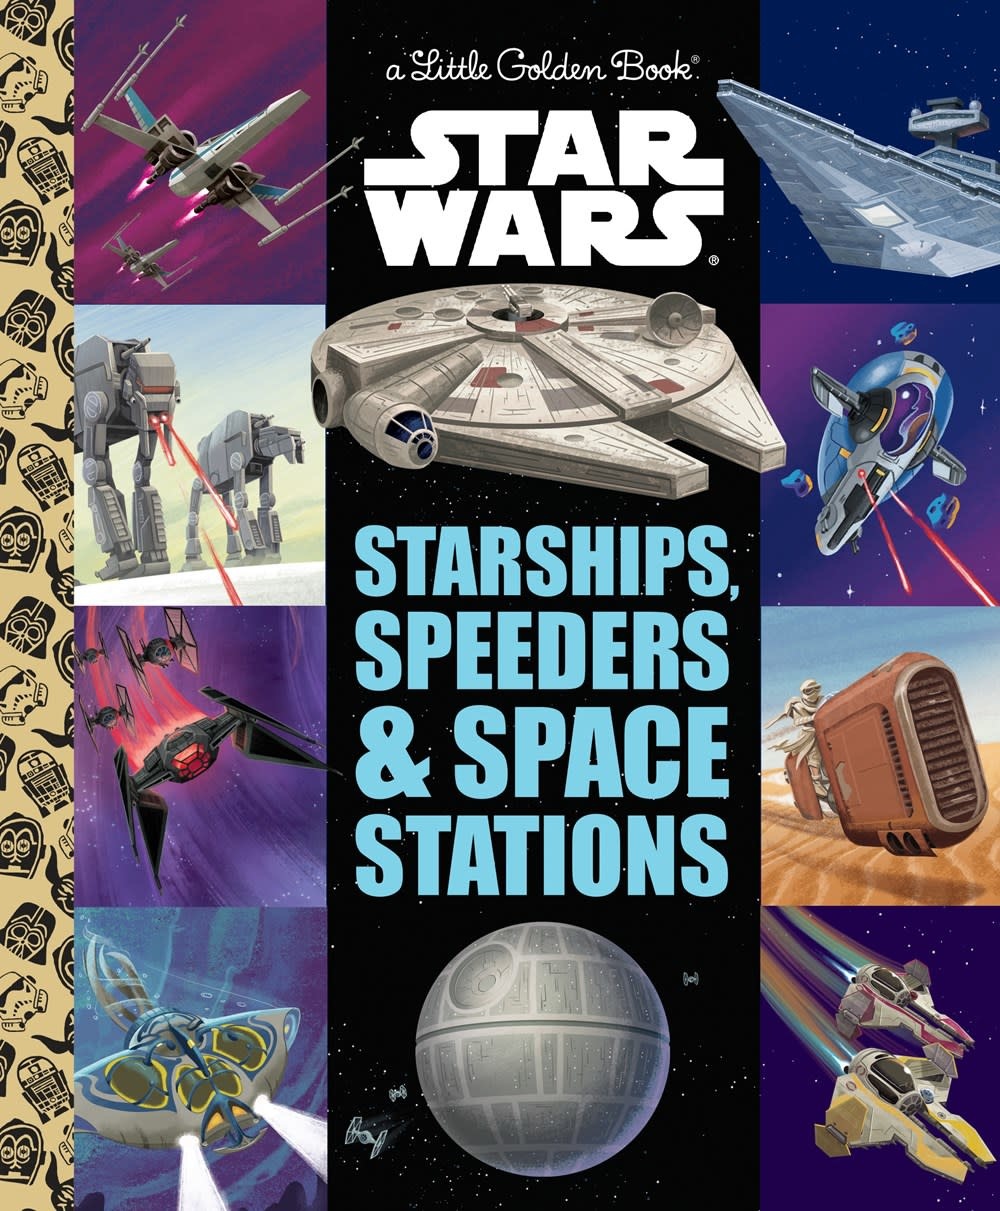 Golden Books Star Wars: Starships, Speeders & Space Stations (Little Golden Book)